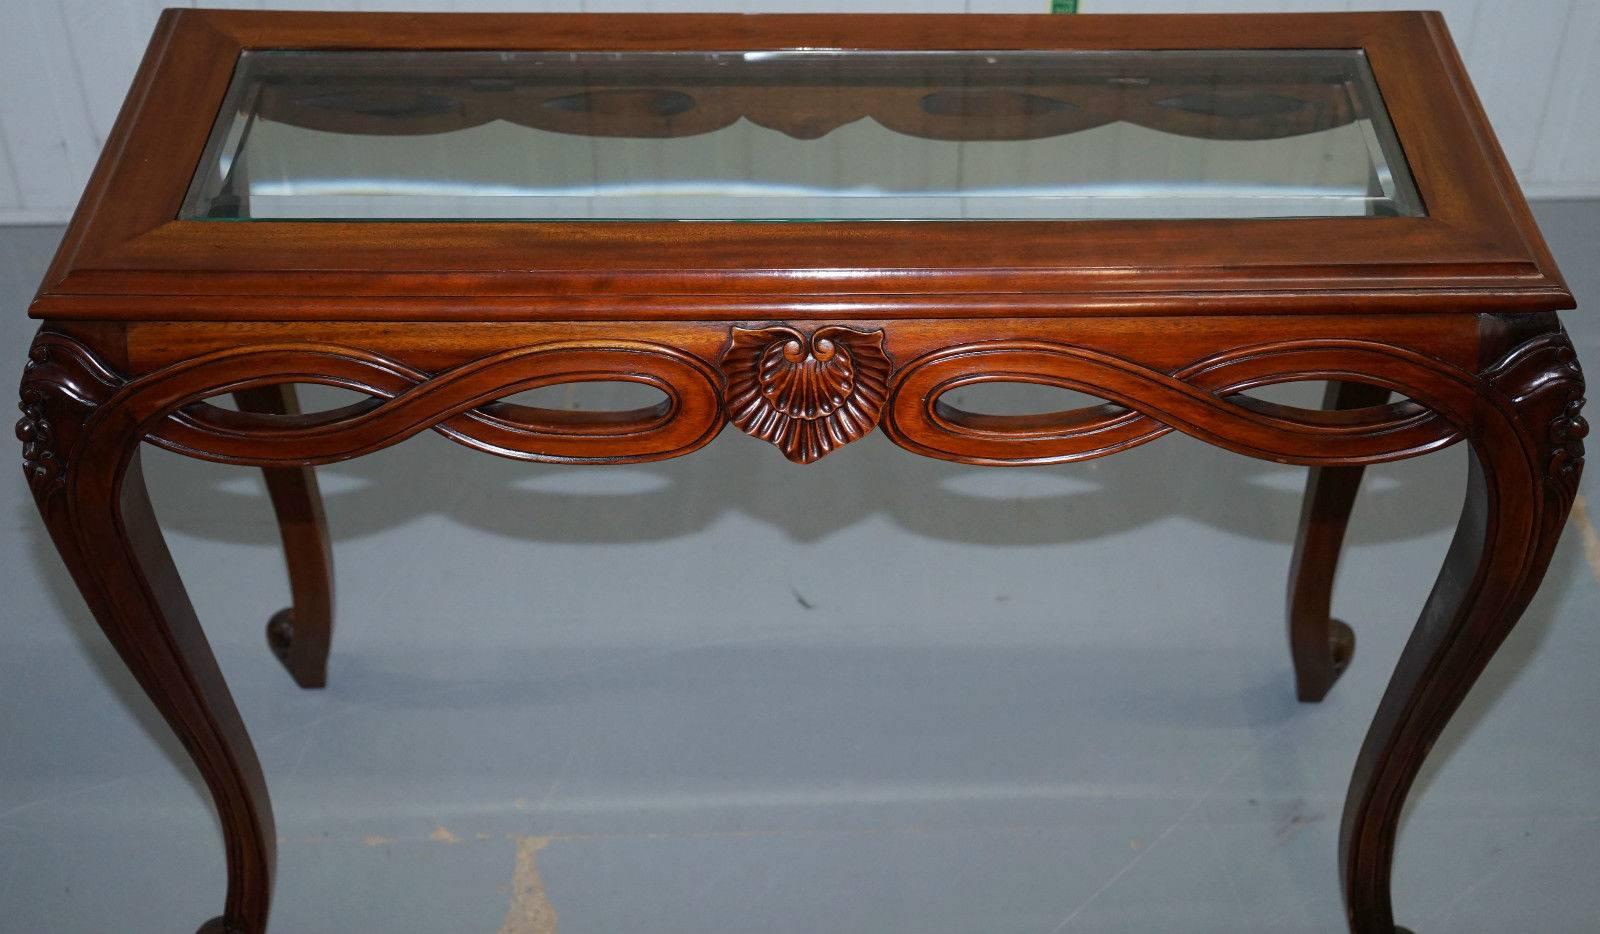 Regency Stunning Long Elegant Cabriole Legged Console Mahogany Table Beveled Glass Top